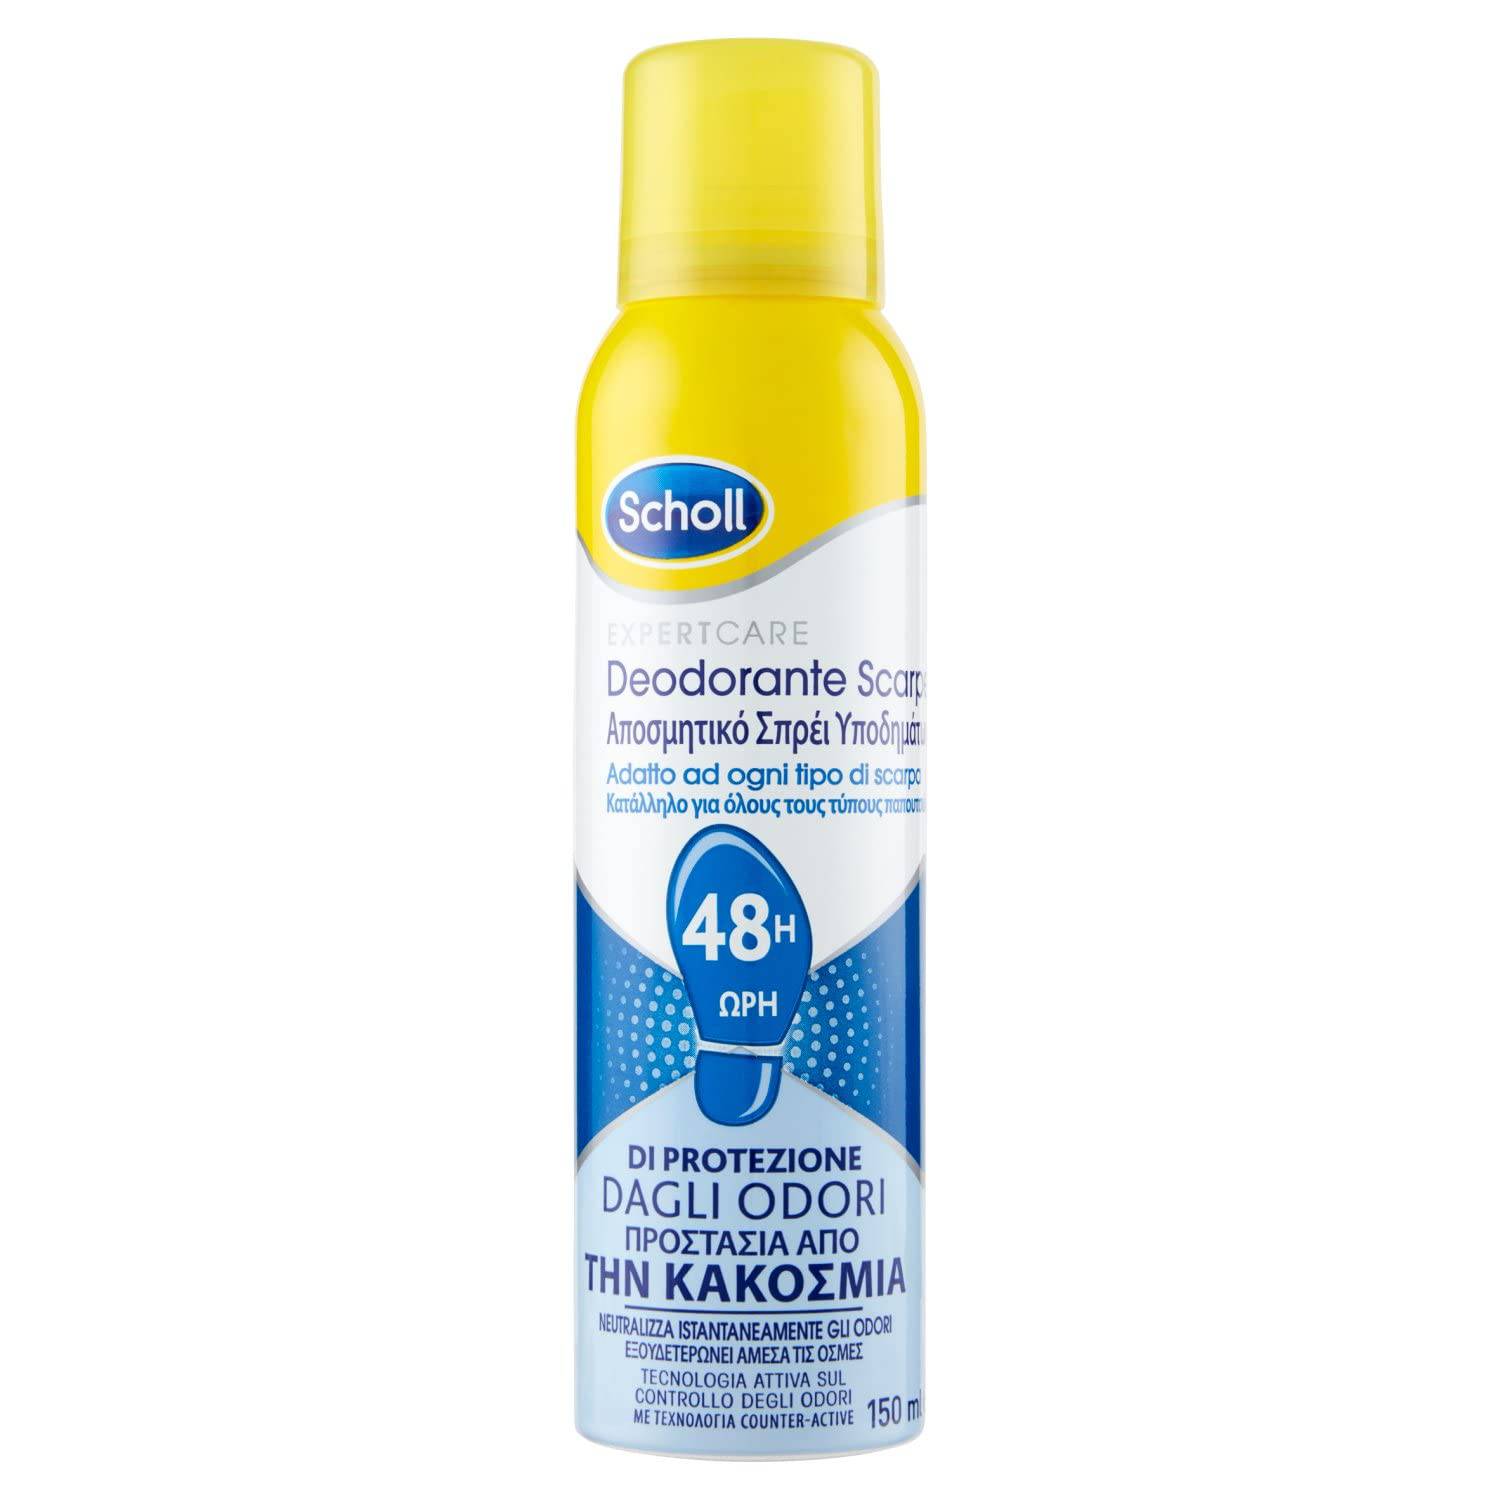 Scholl Deodorante Spray per Scarpe, 48h di Protezione Dagli Odori - Jasmine Parfums- [ean]